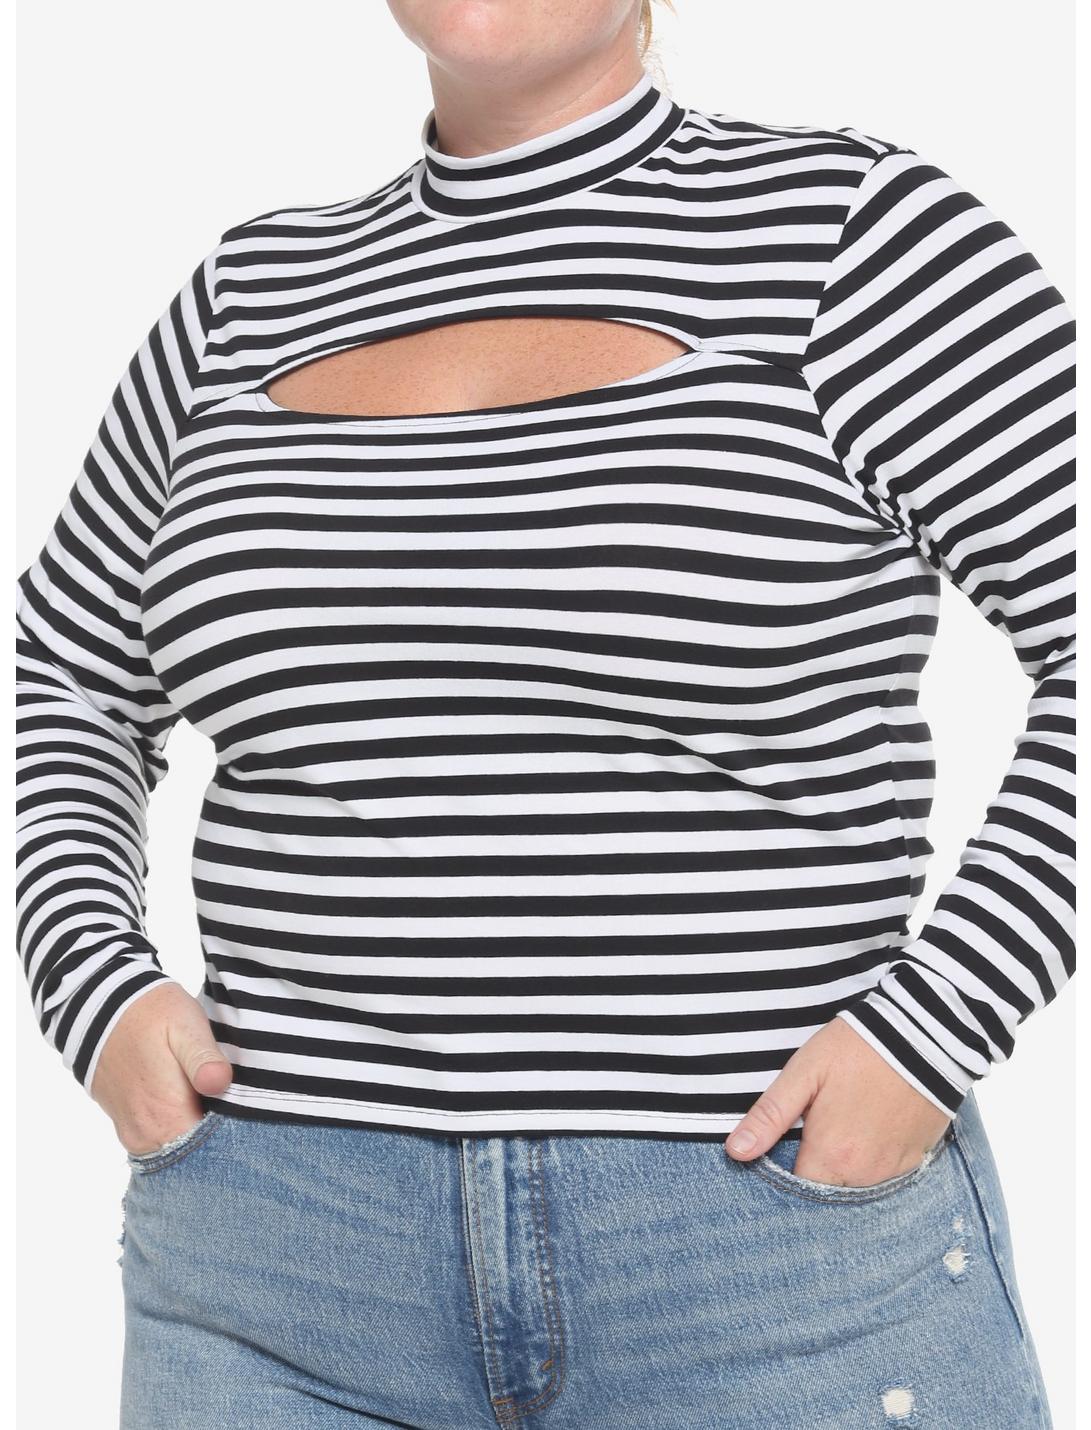 Black & White Stripe Cutout Girls Long-Sleeve Top Plus Size, STRIPE-BLACK WHITE, hi-res